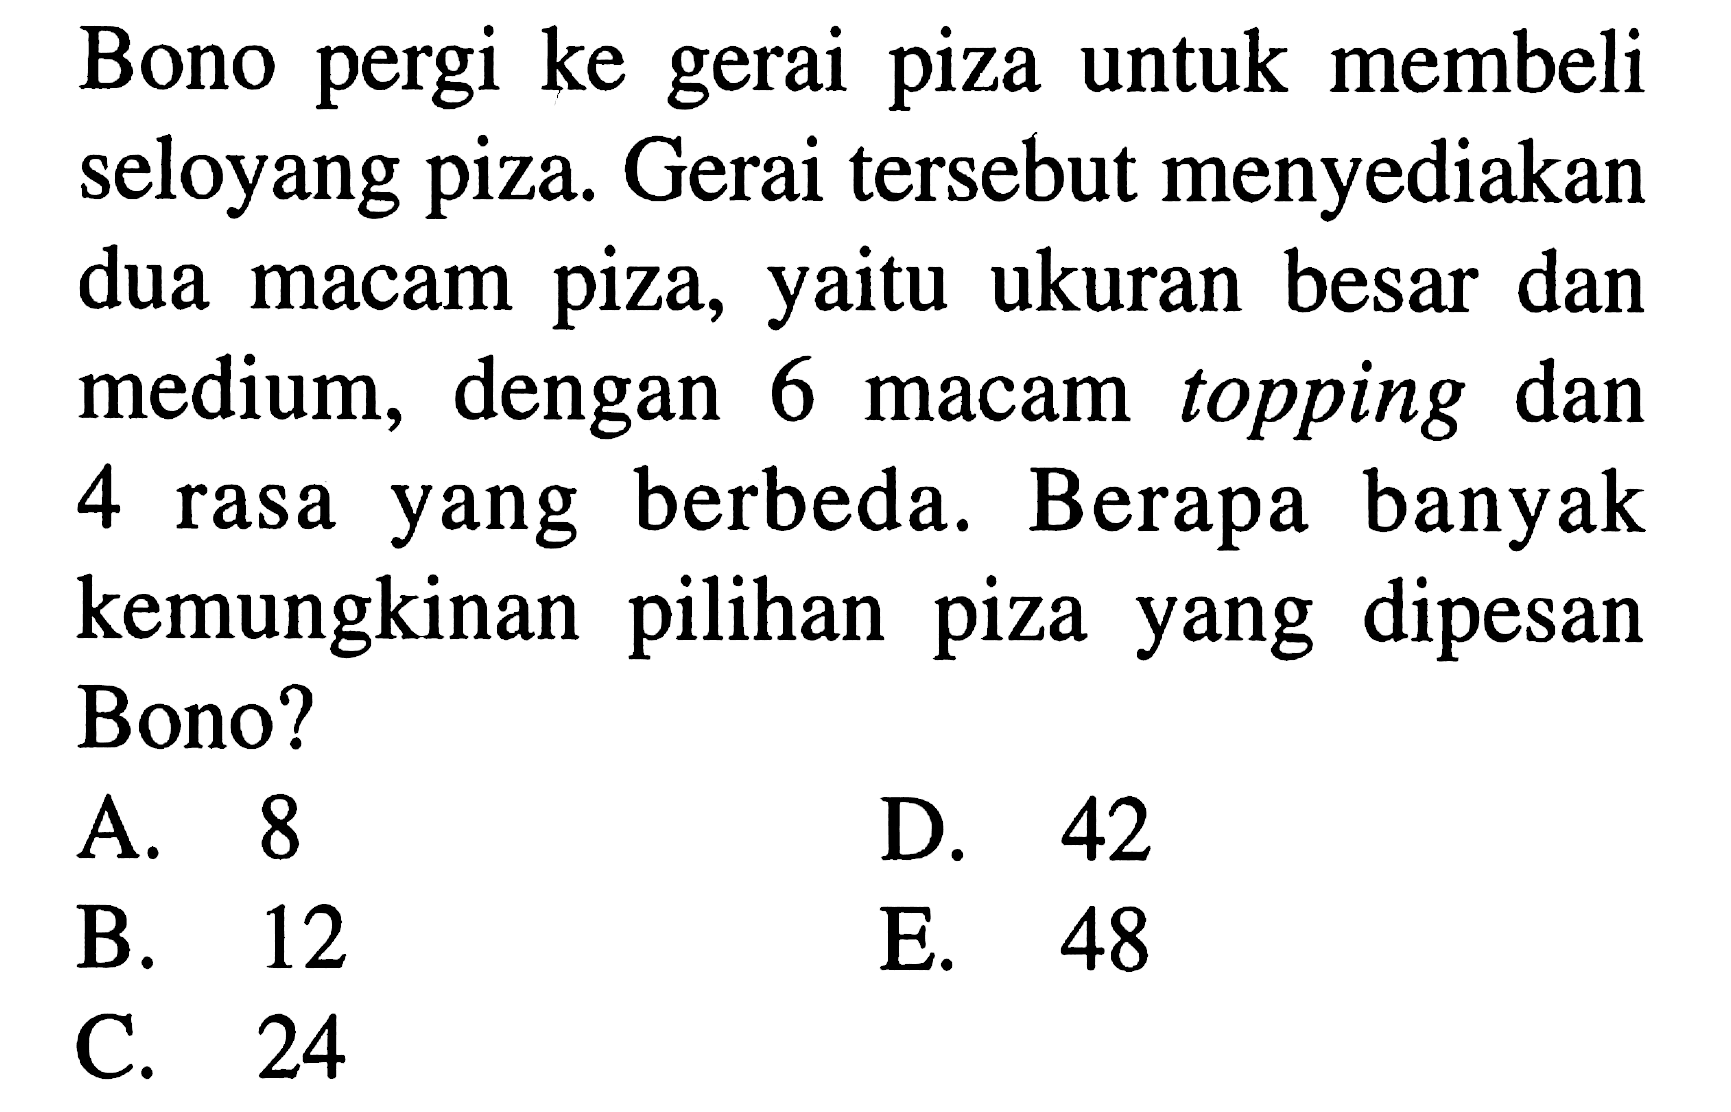 Bono pergi ke gerai piza untuk membeli seloyang piza. Gerai tersebut menyediakan dua macam piza, yaitu ukuran besar dan medium, dengan 6 macam topping dan 4 rasa yang berbeda. Berapa banyak kemungkinan pilihan piza yang dipesan Bono?